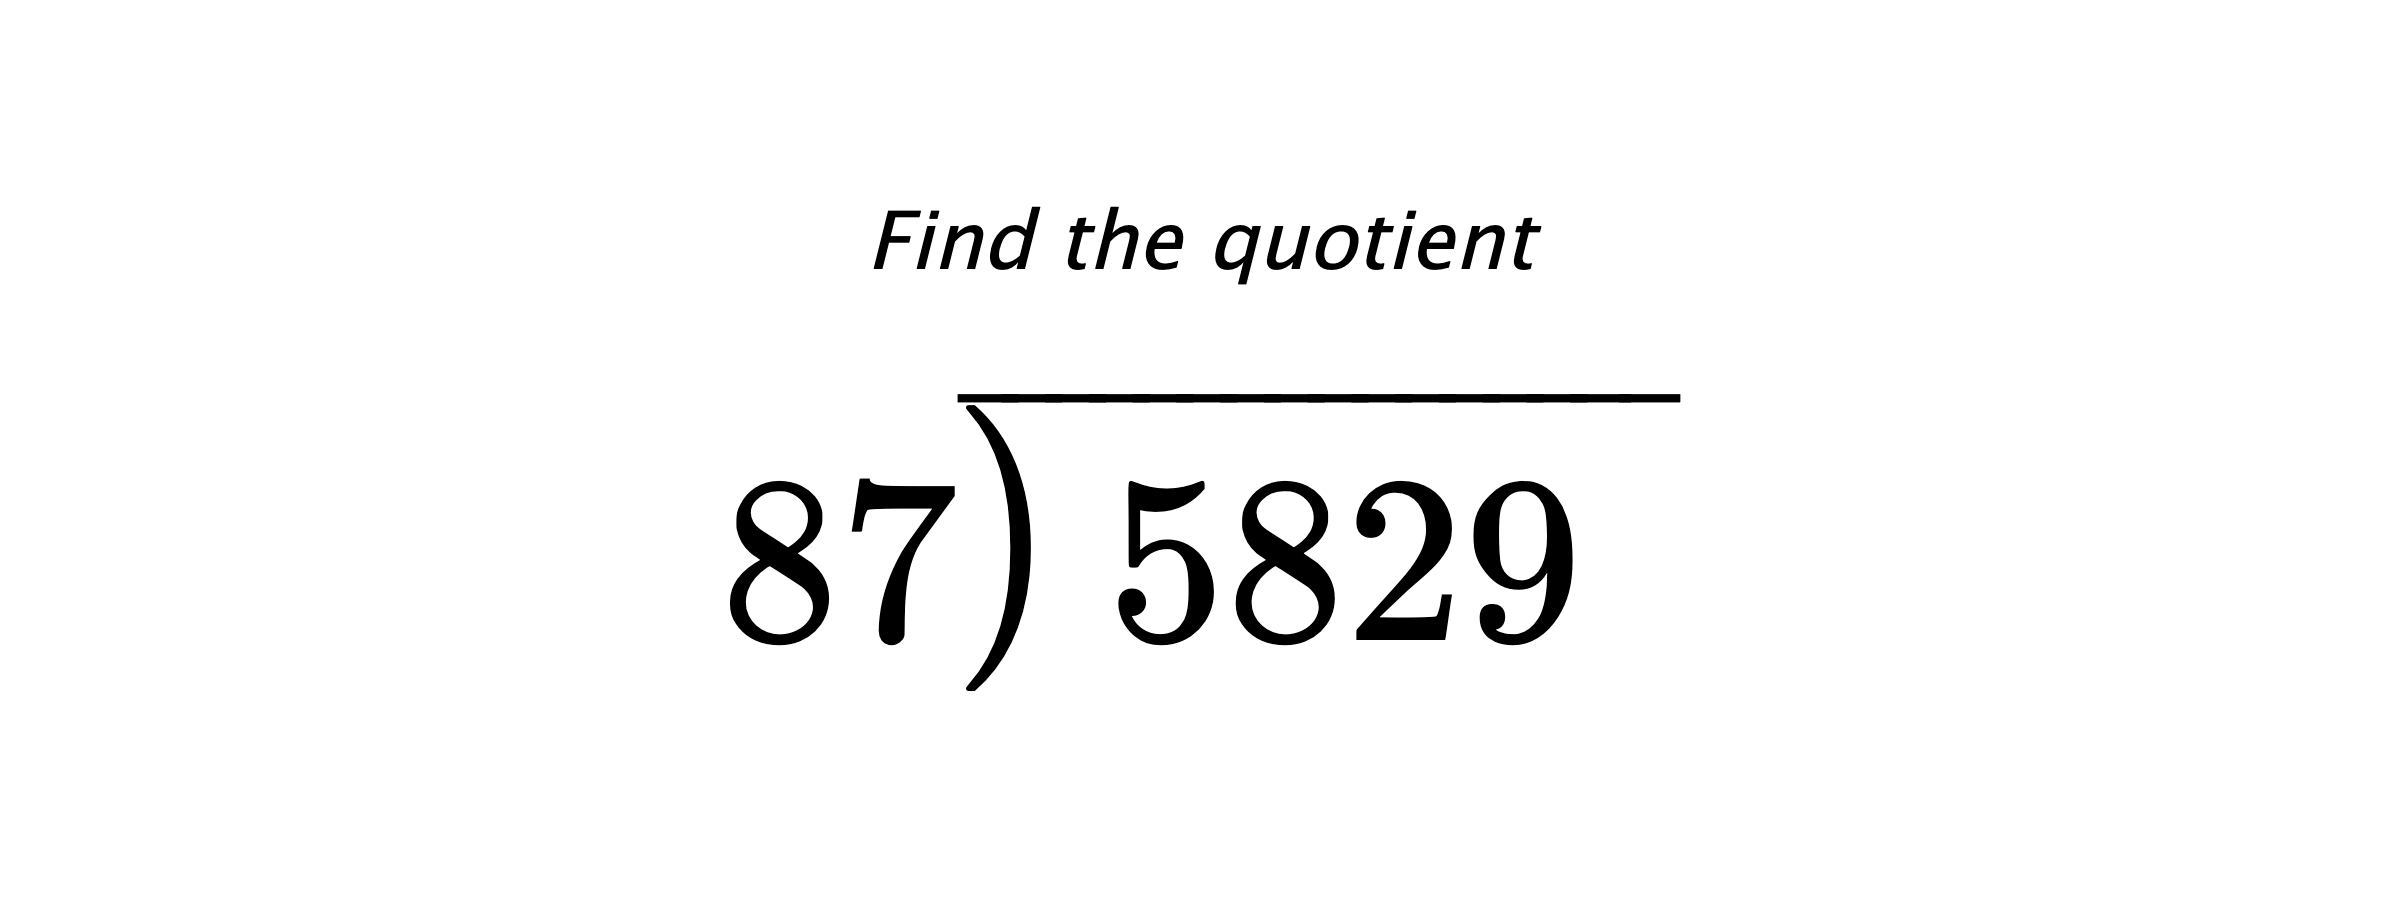 Find the quotient $ 87{\overline{\smash{\raise.3ex\hbox{$\big)$}}\,5829\phantom{)}}} $